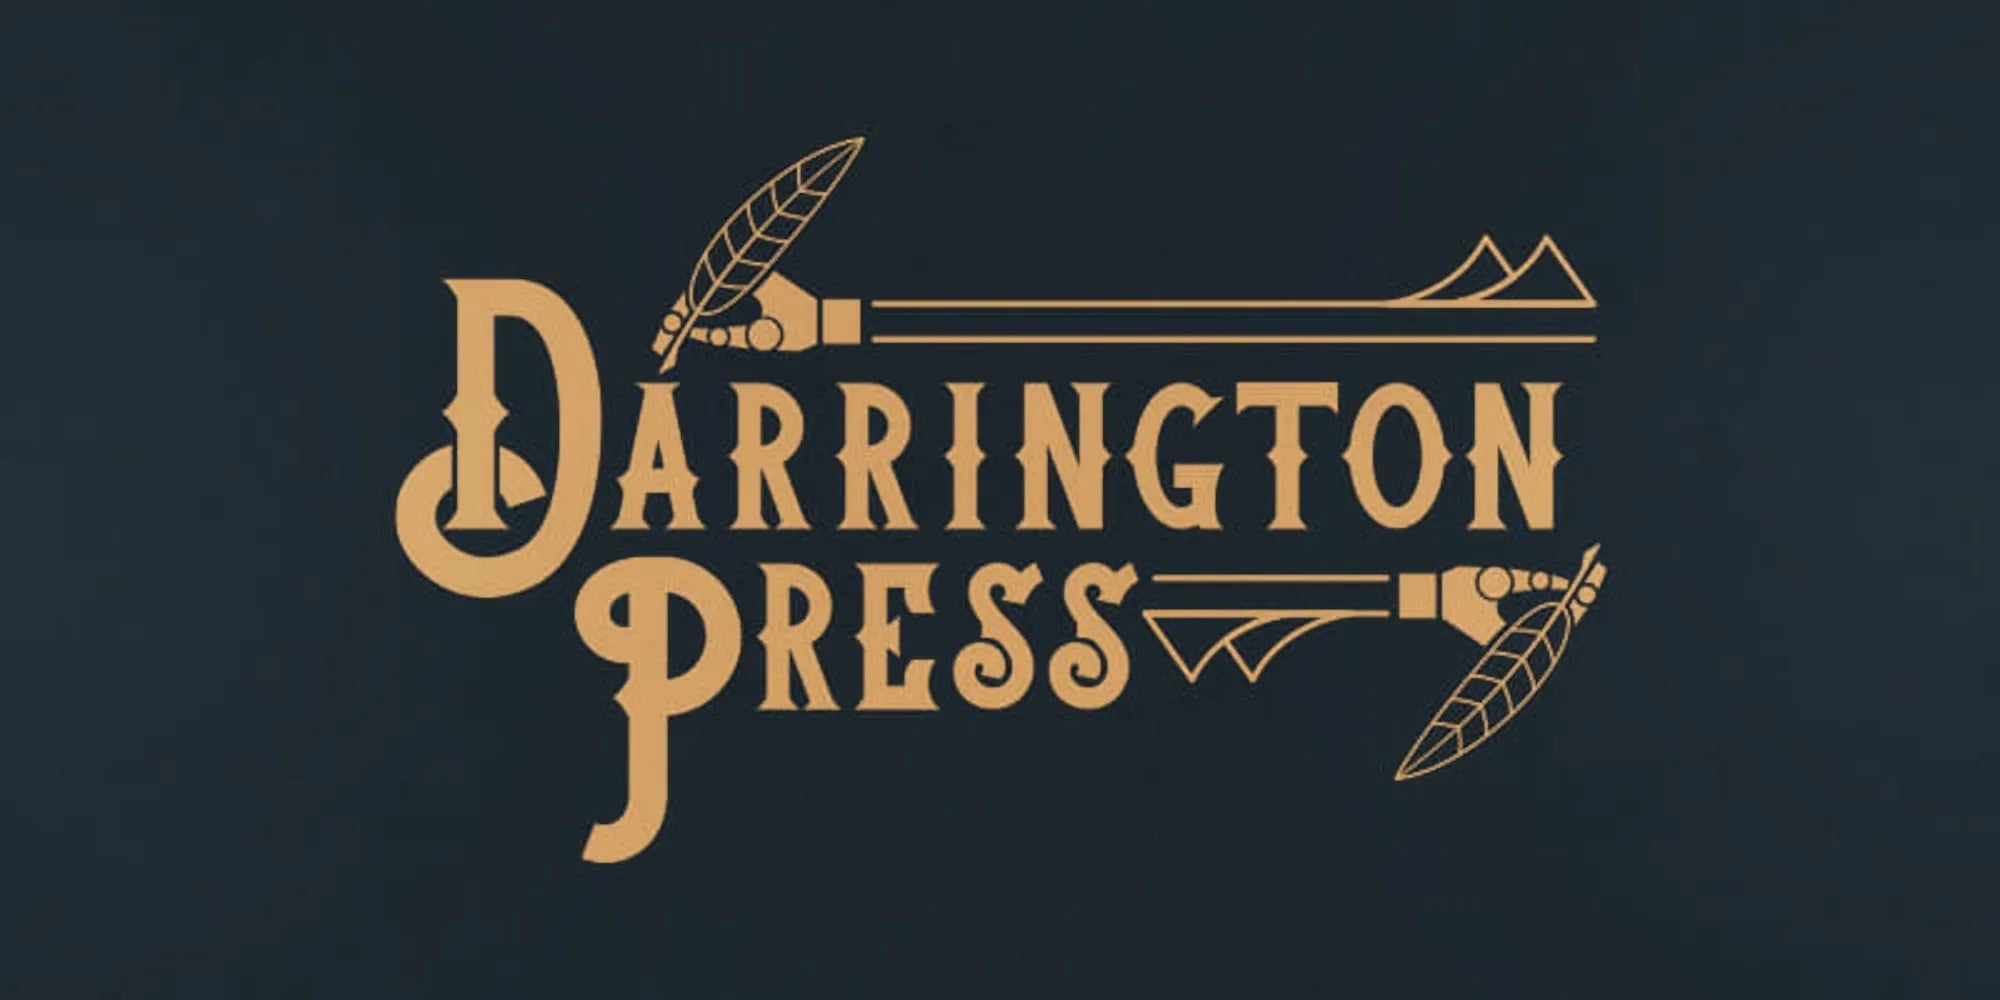 Darrington Press & Critical Role